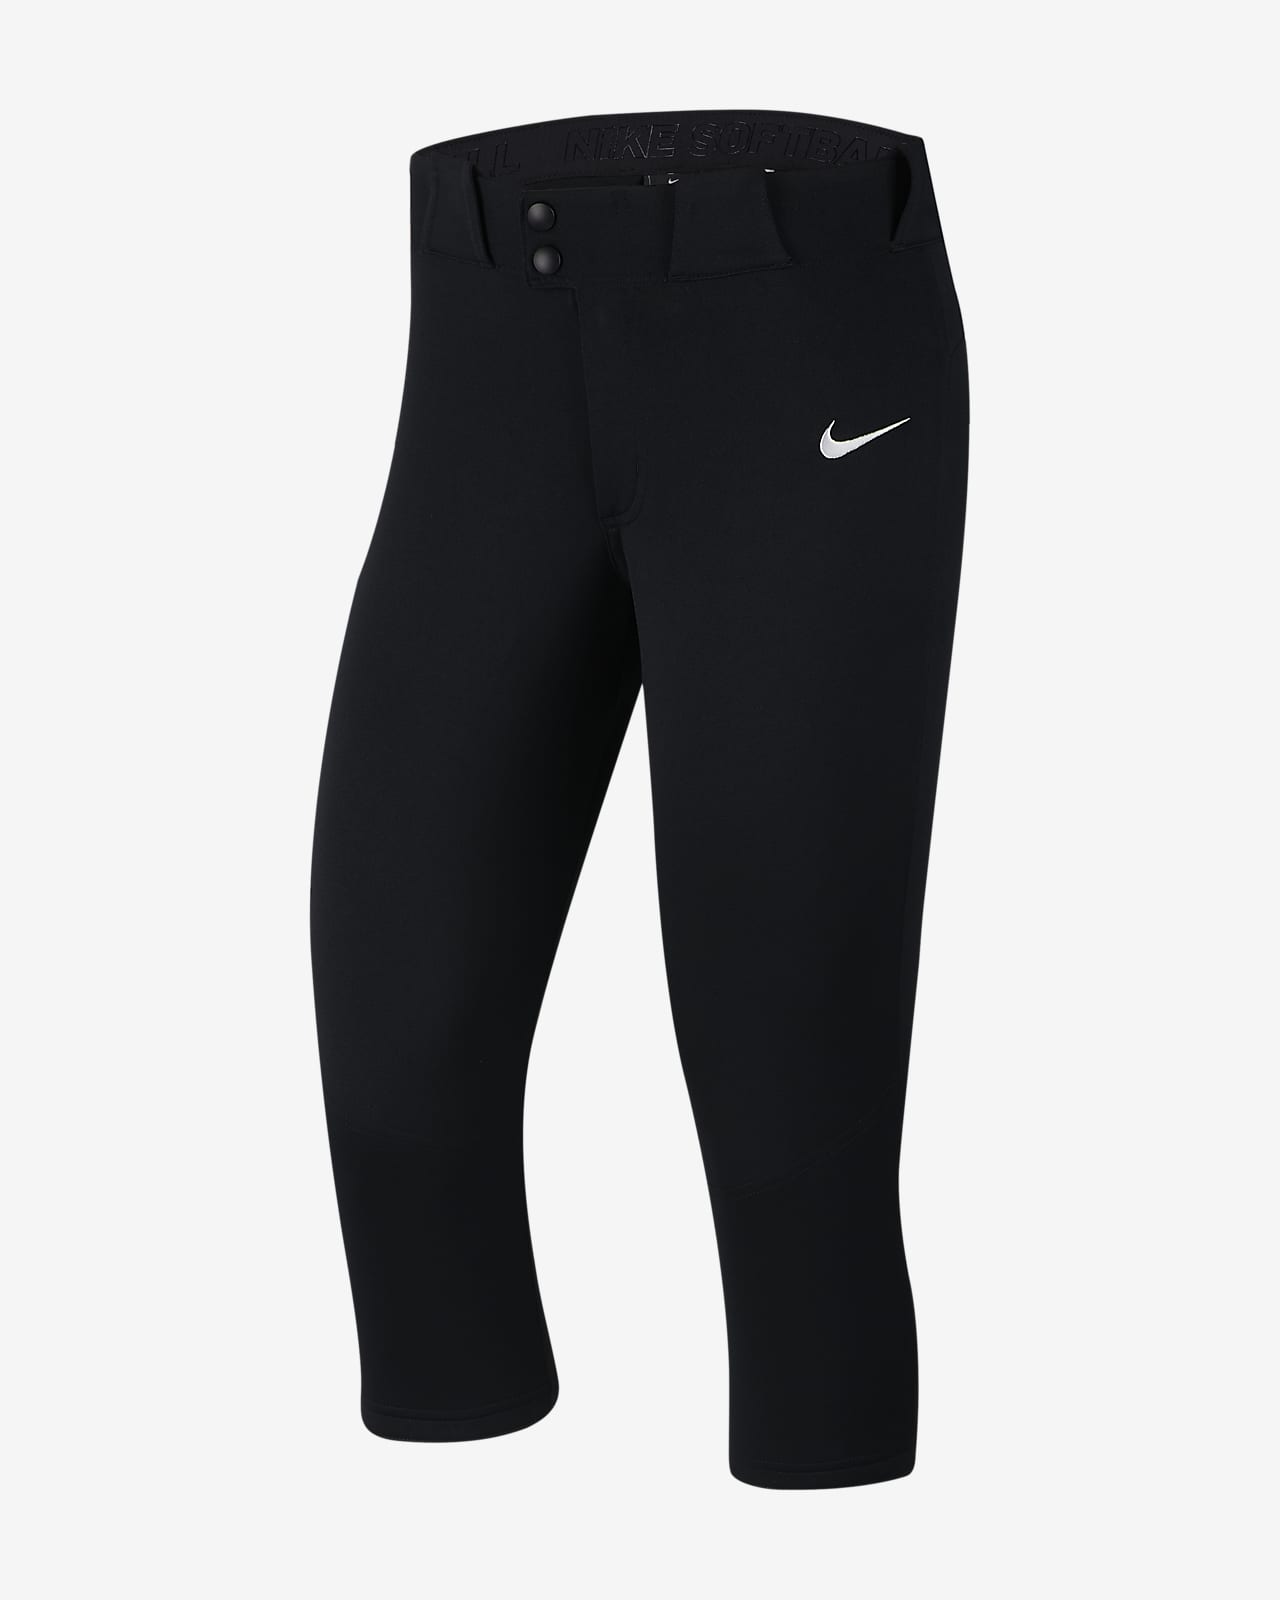 Pantalones de softball largo 3/4 para mujer Nike Vapor Select